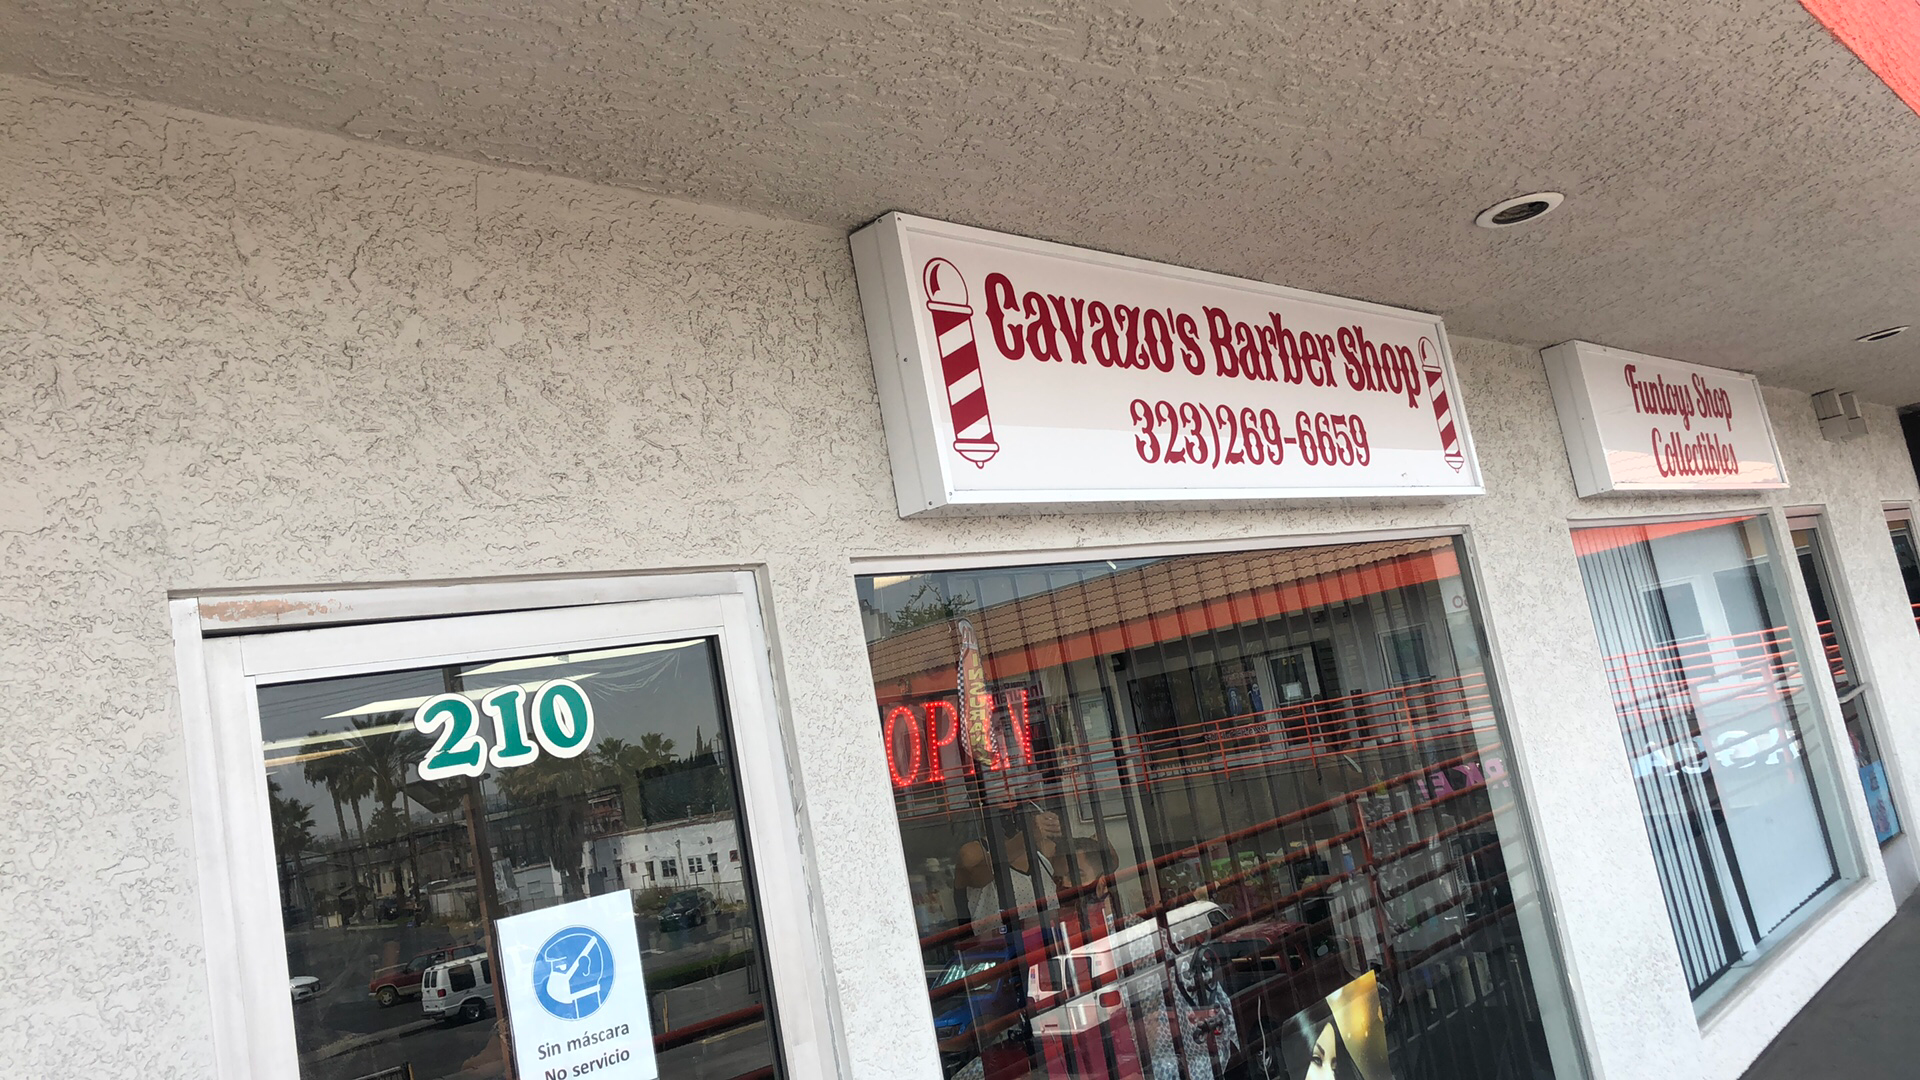 Cavazos Barber Shop